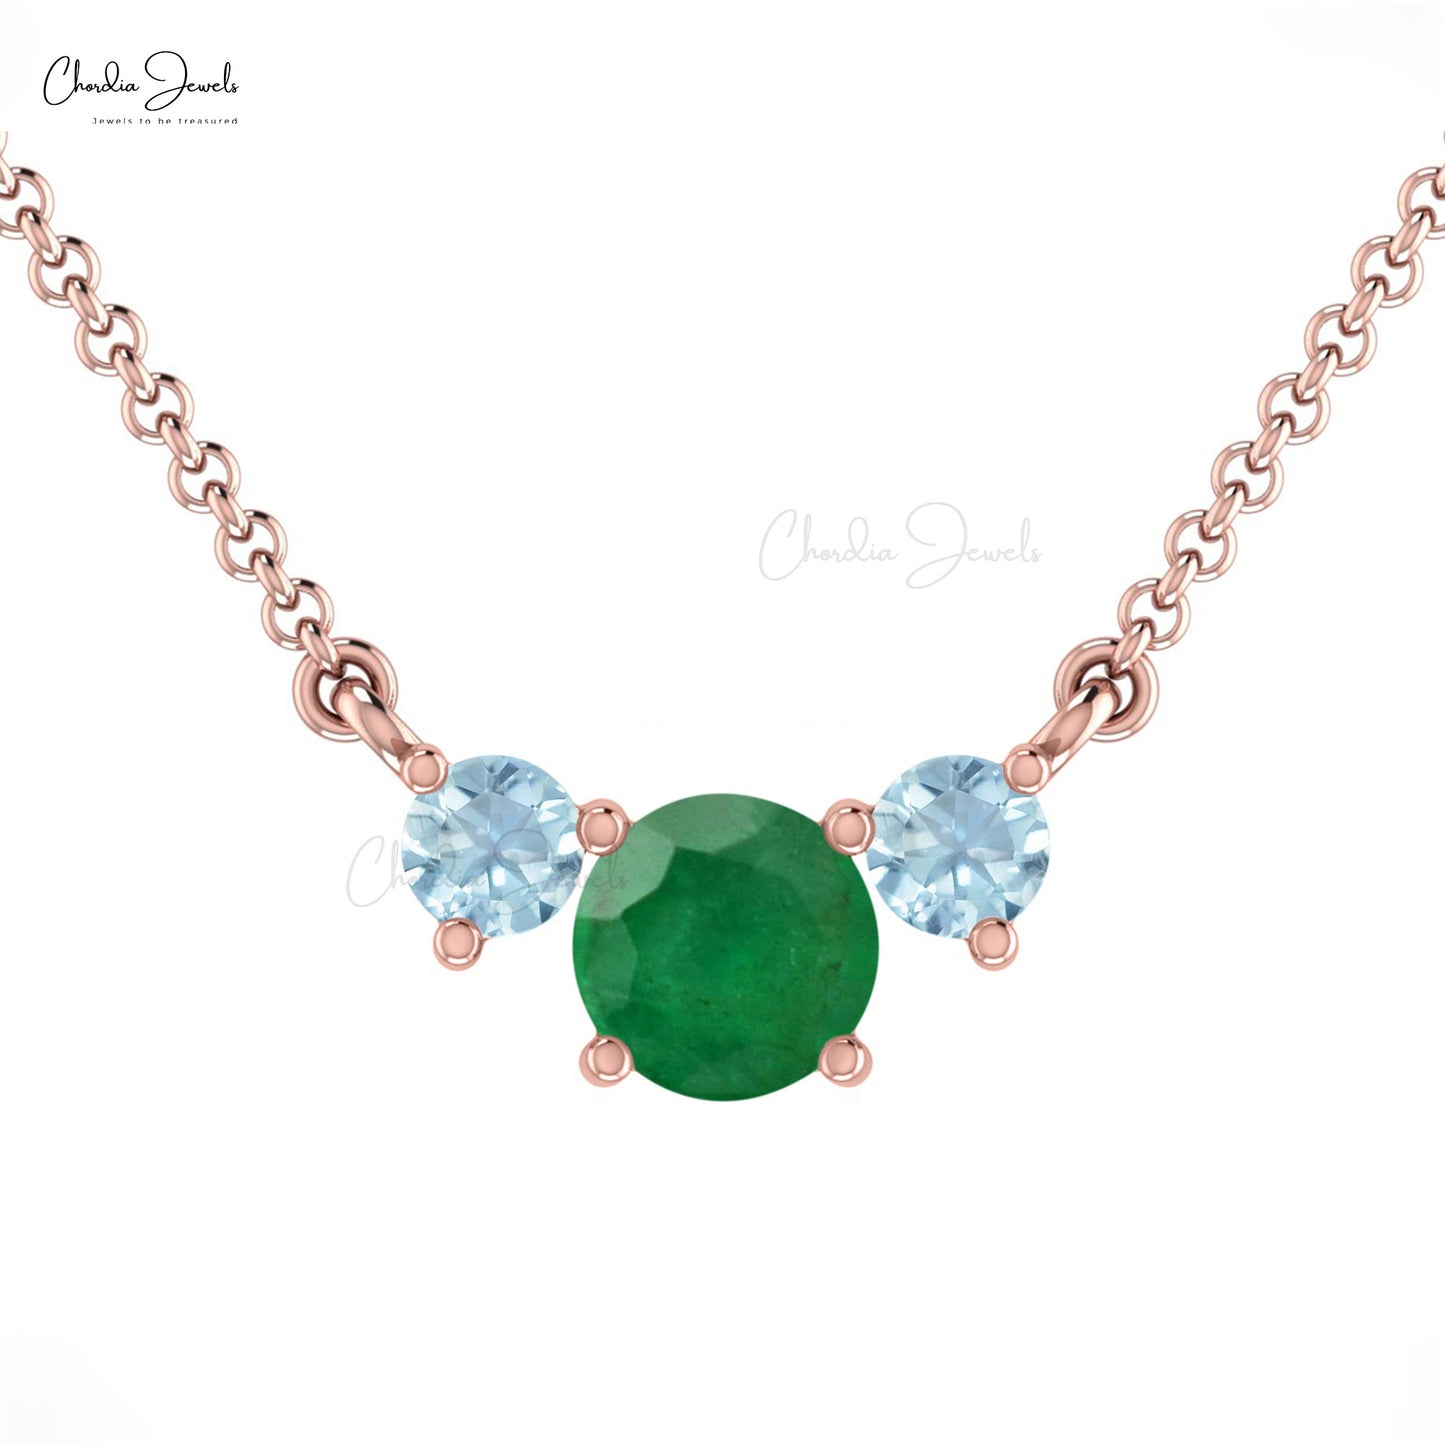 Buy Emerald Cut Diamond Necklace Online